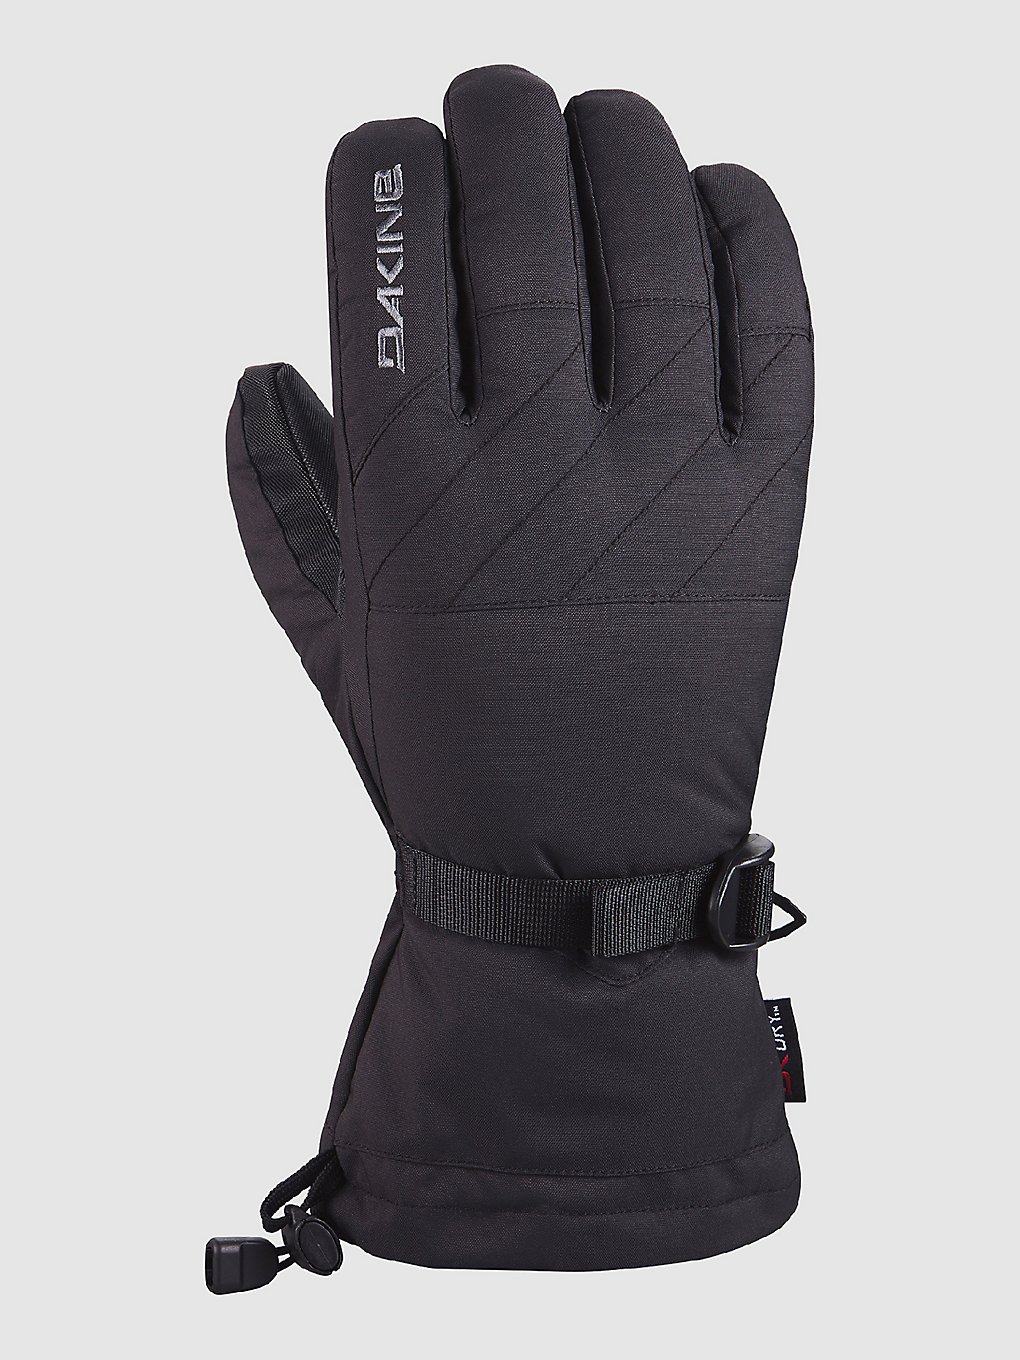 Dakine Talon Handschuhe black kaufen